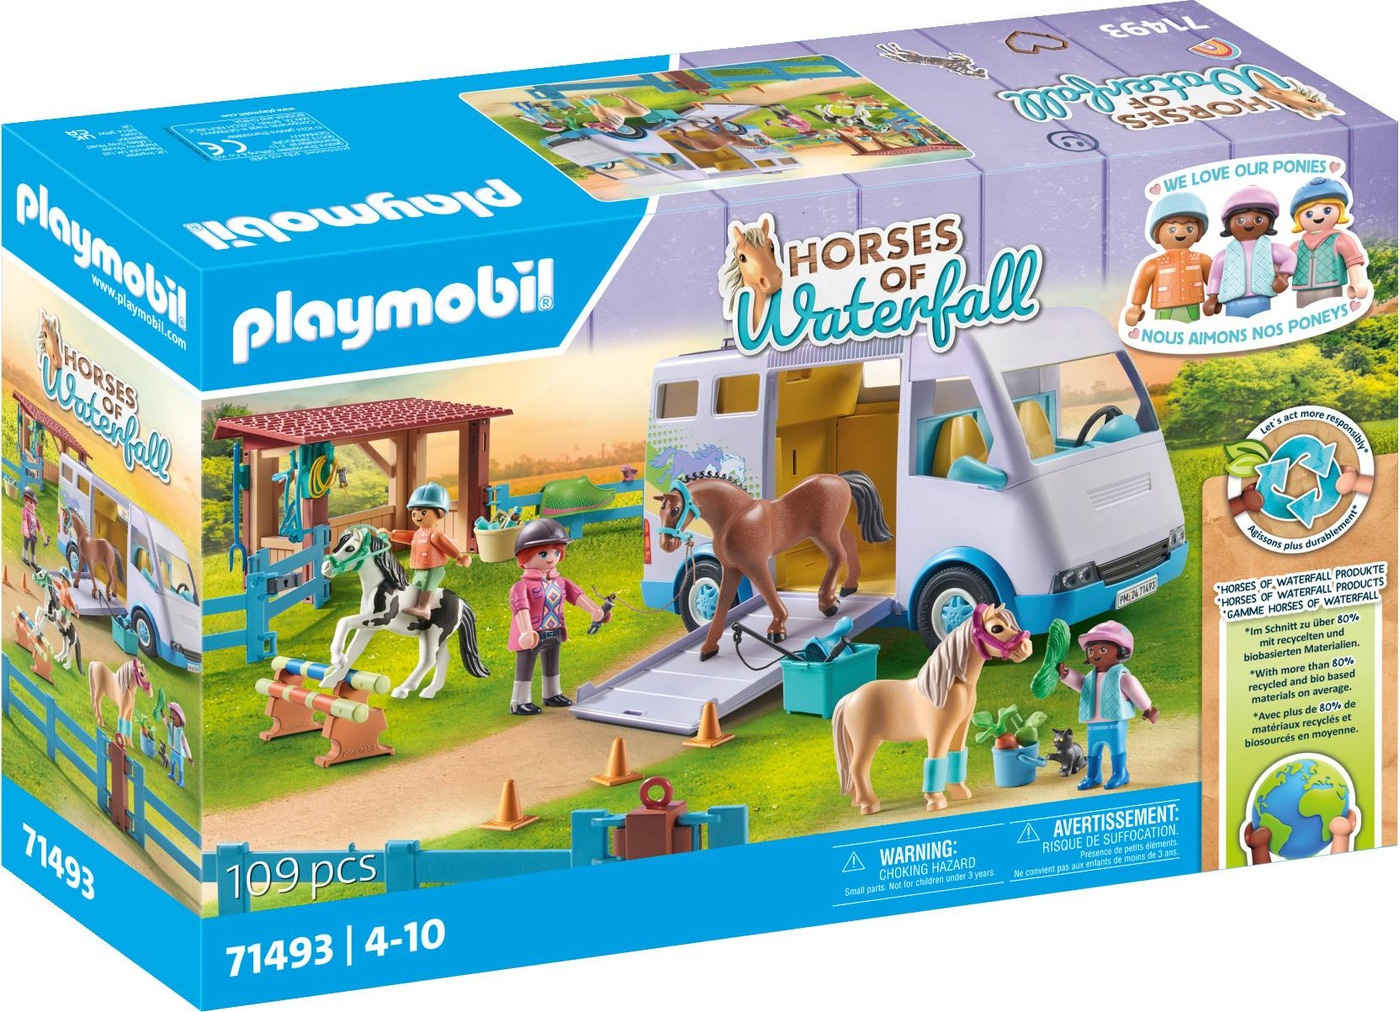 Playmobil Horses of Waterfall 71493 pas cher, Van pour cheval et